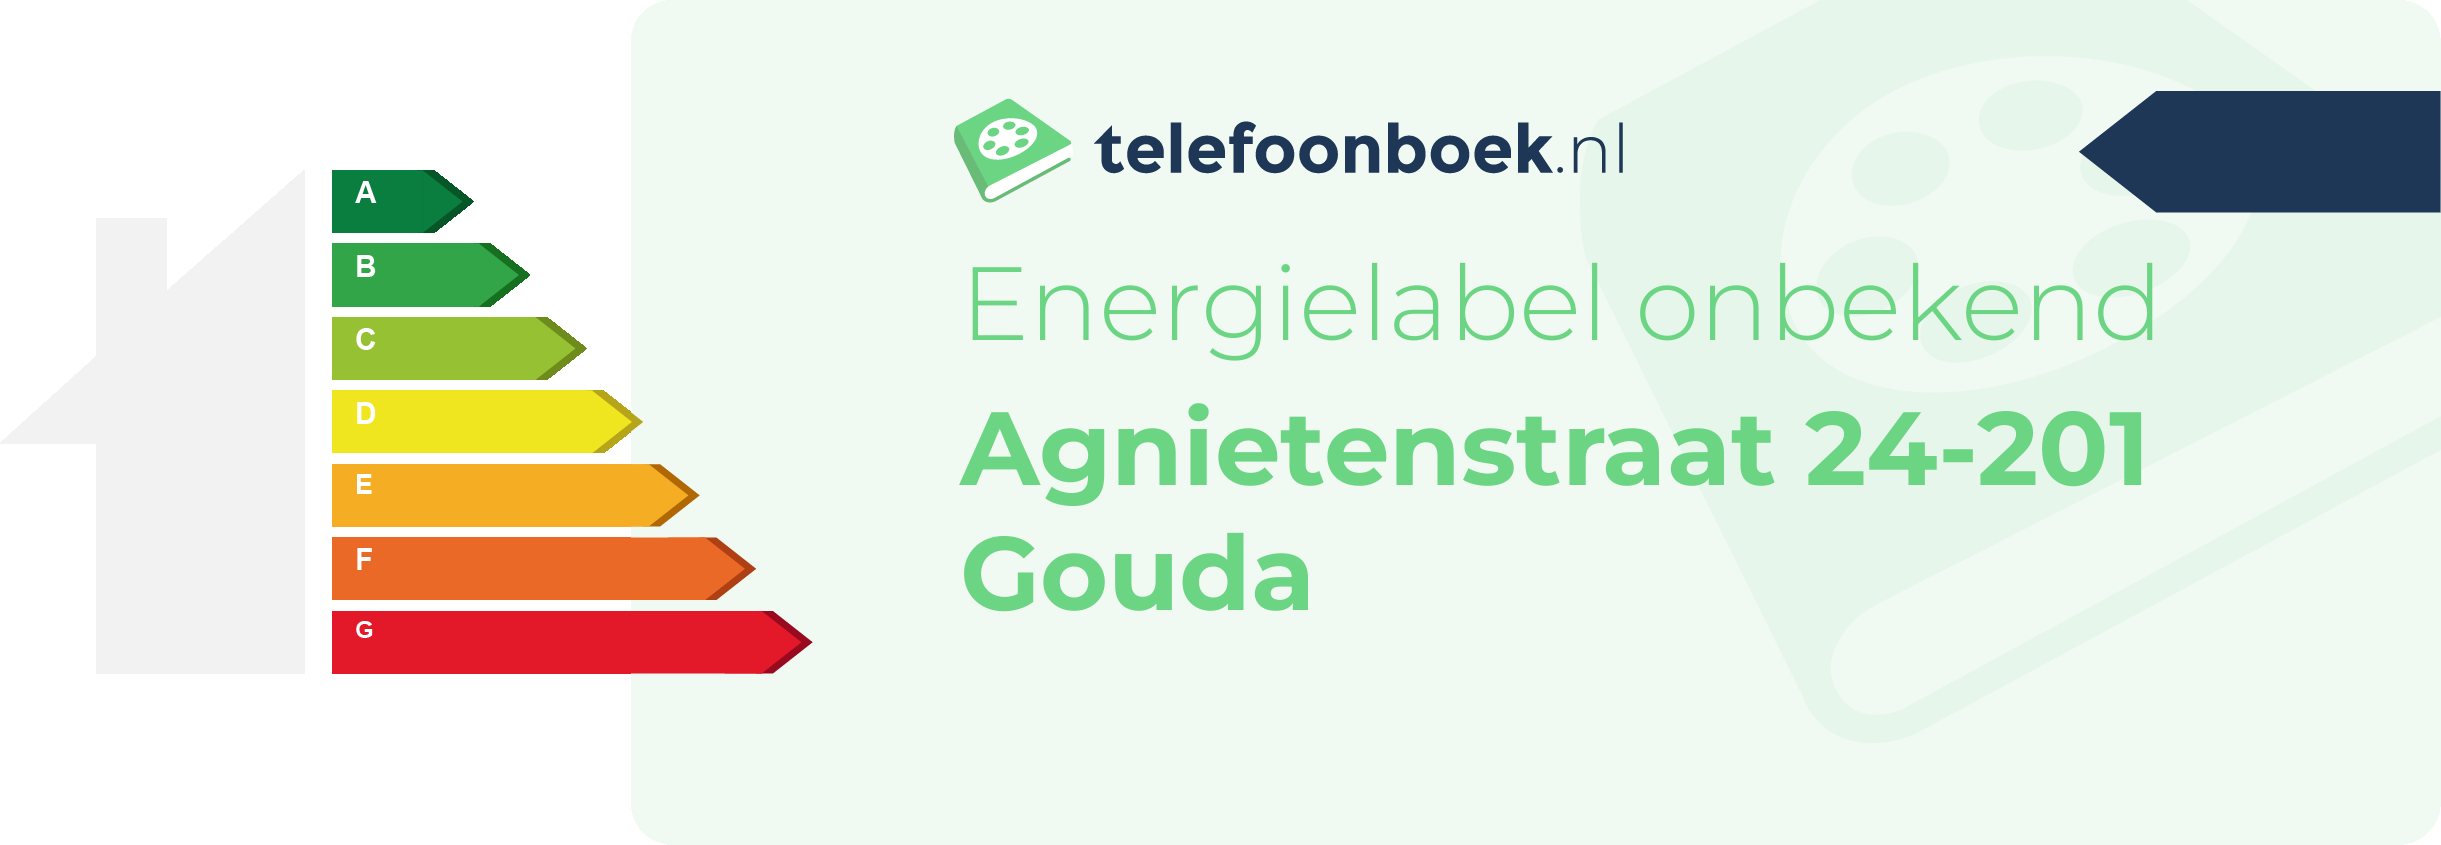 Energielabel Agnietenstraat 24-201 Gouda